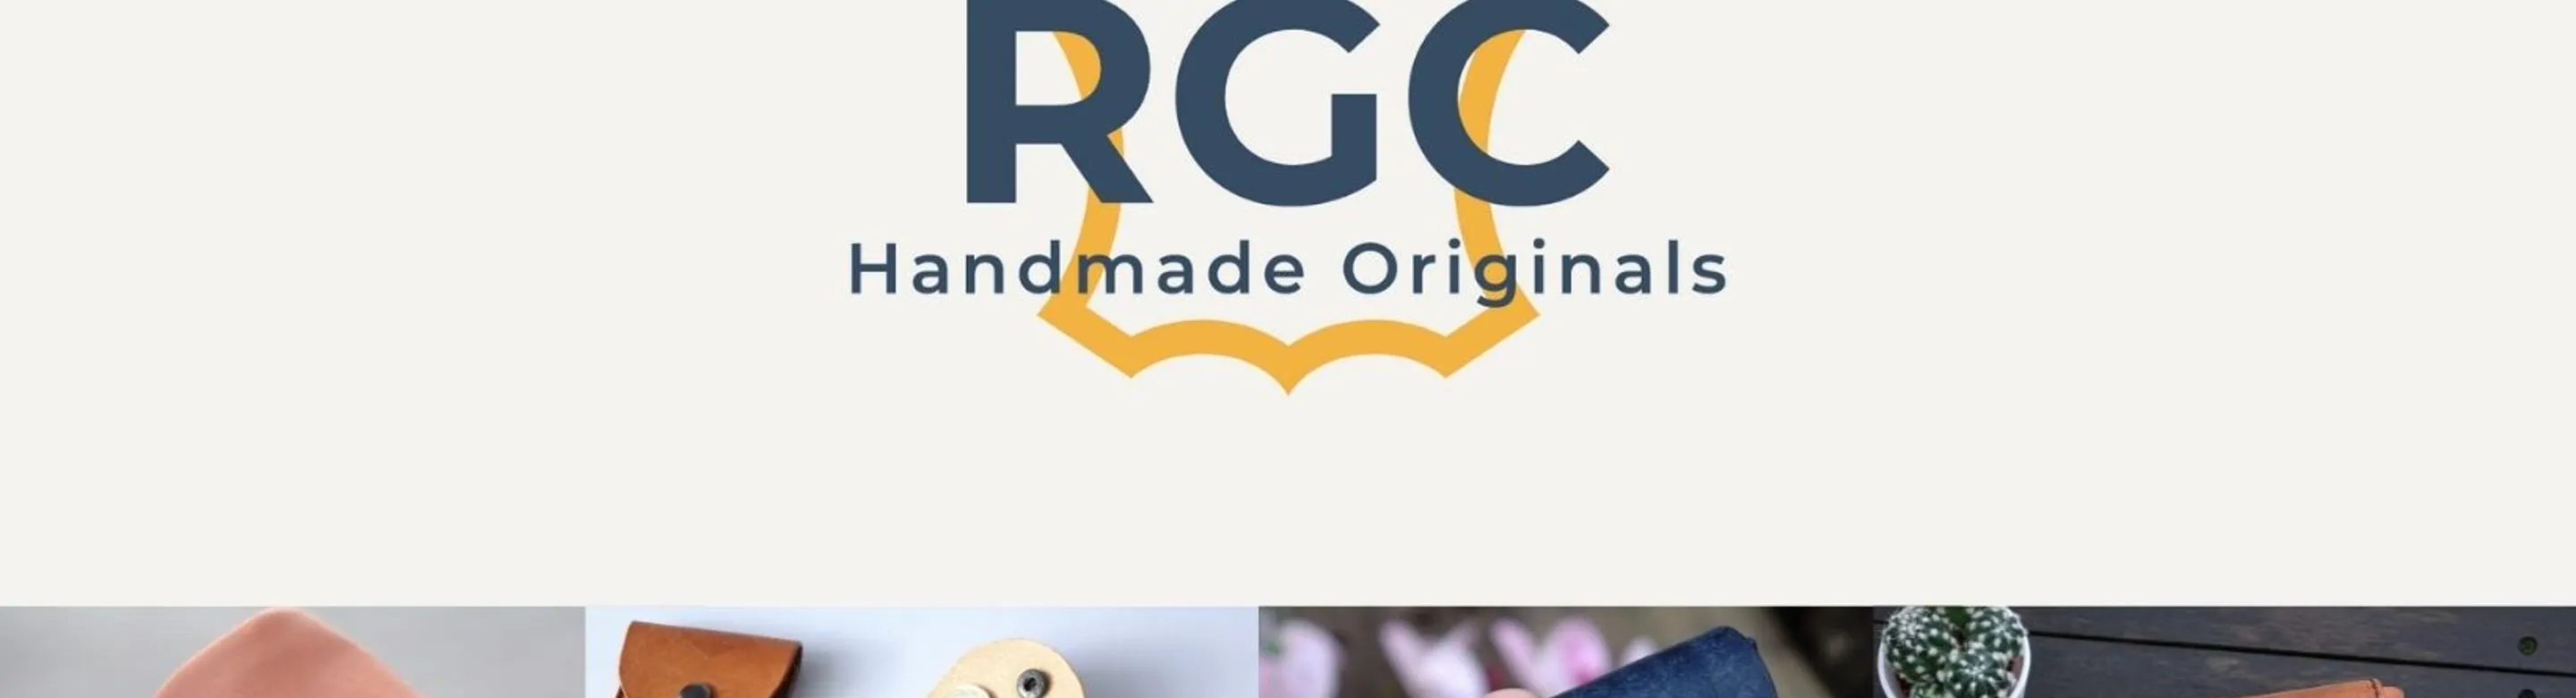 RGC Handmade